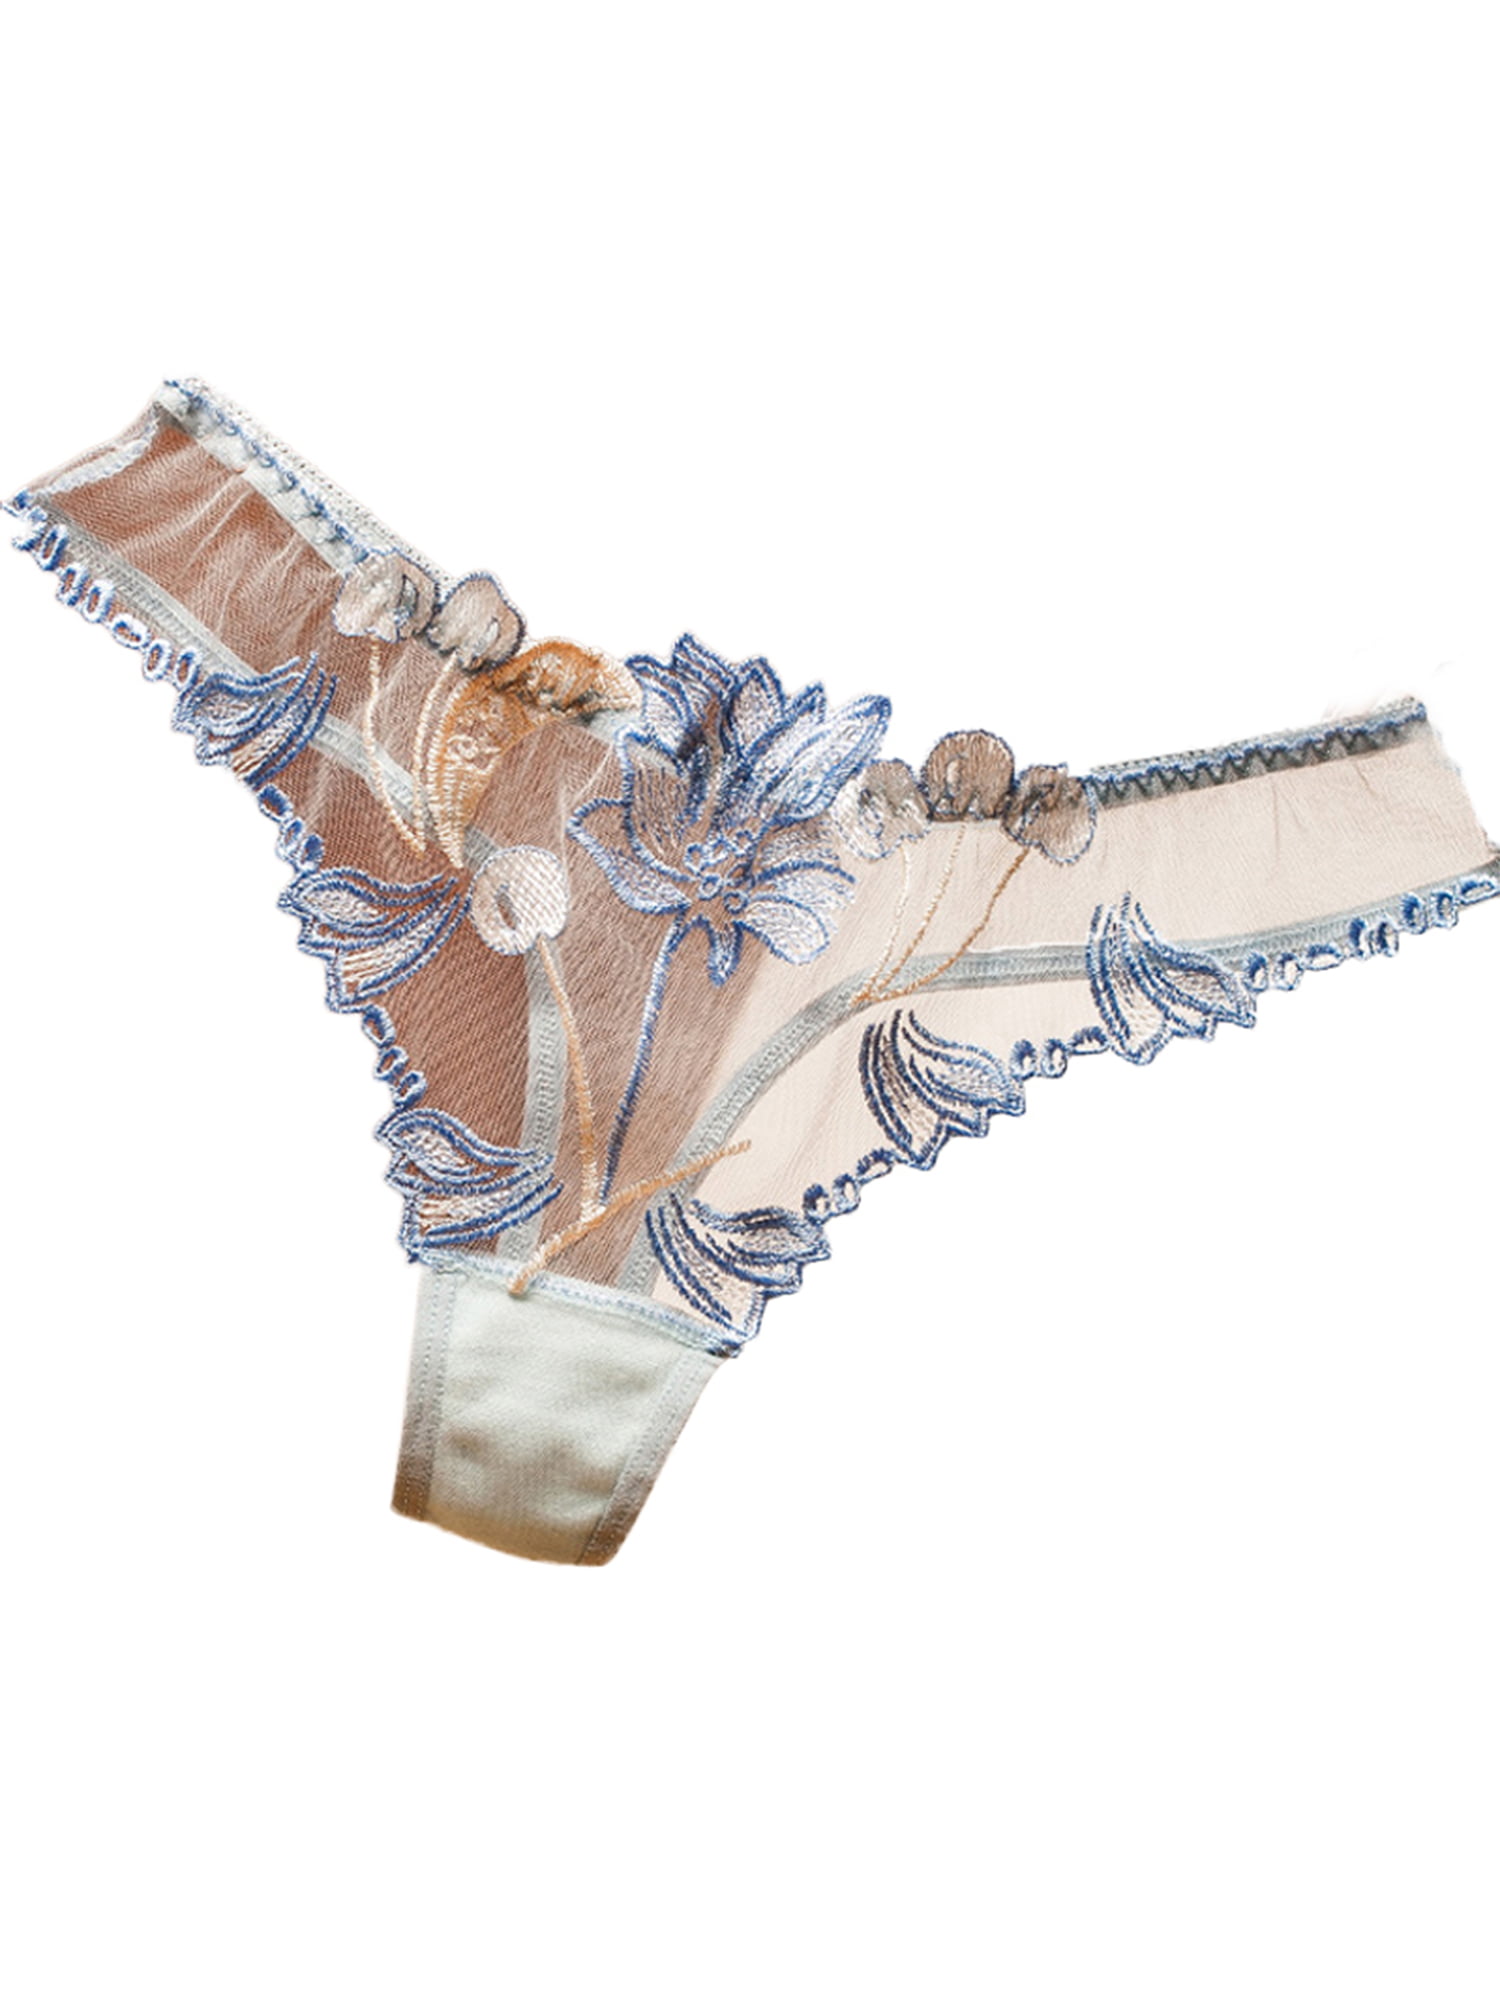 Lallc Women S Lace Thongs Mesh G String Panties Knickers Low Waist Lingerie Underwear